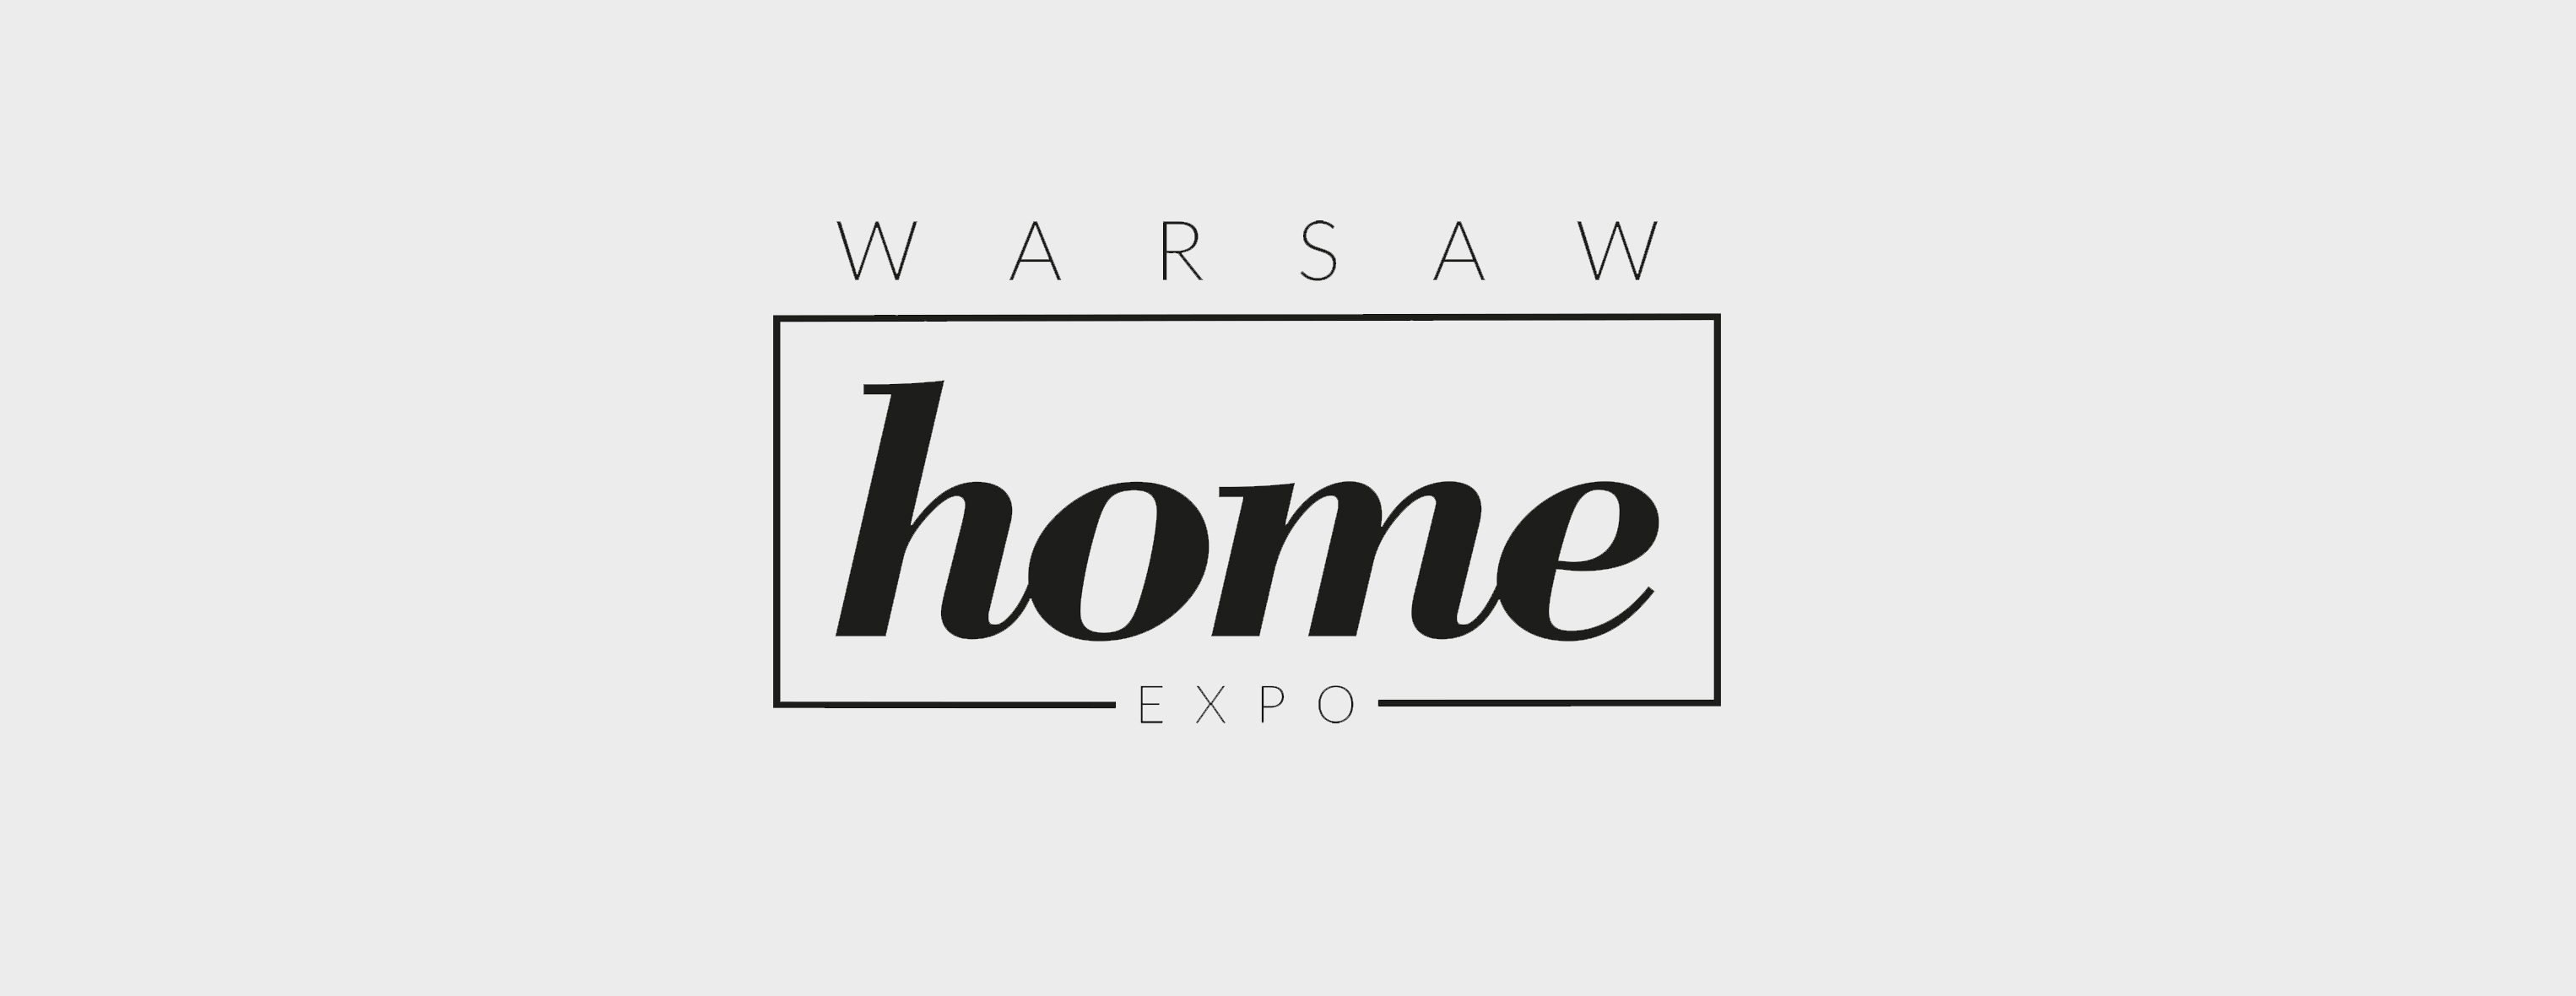 warsaw home agnieszka bar 2